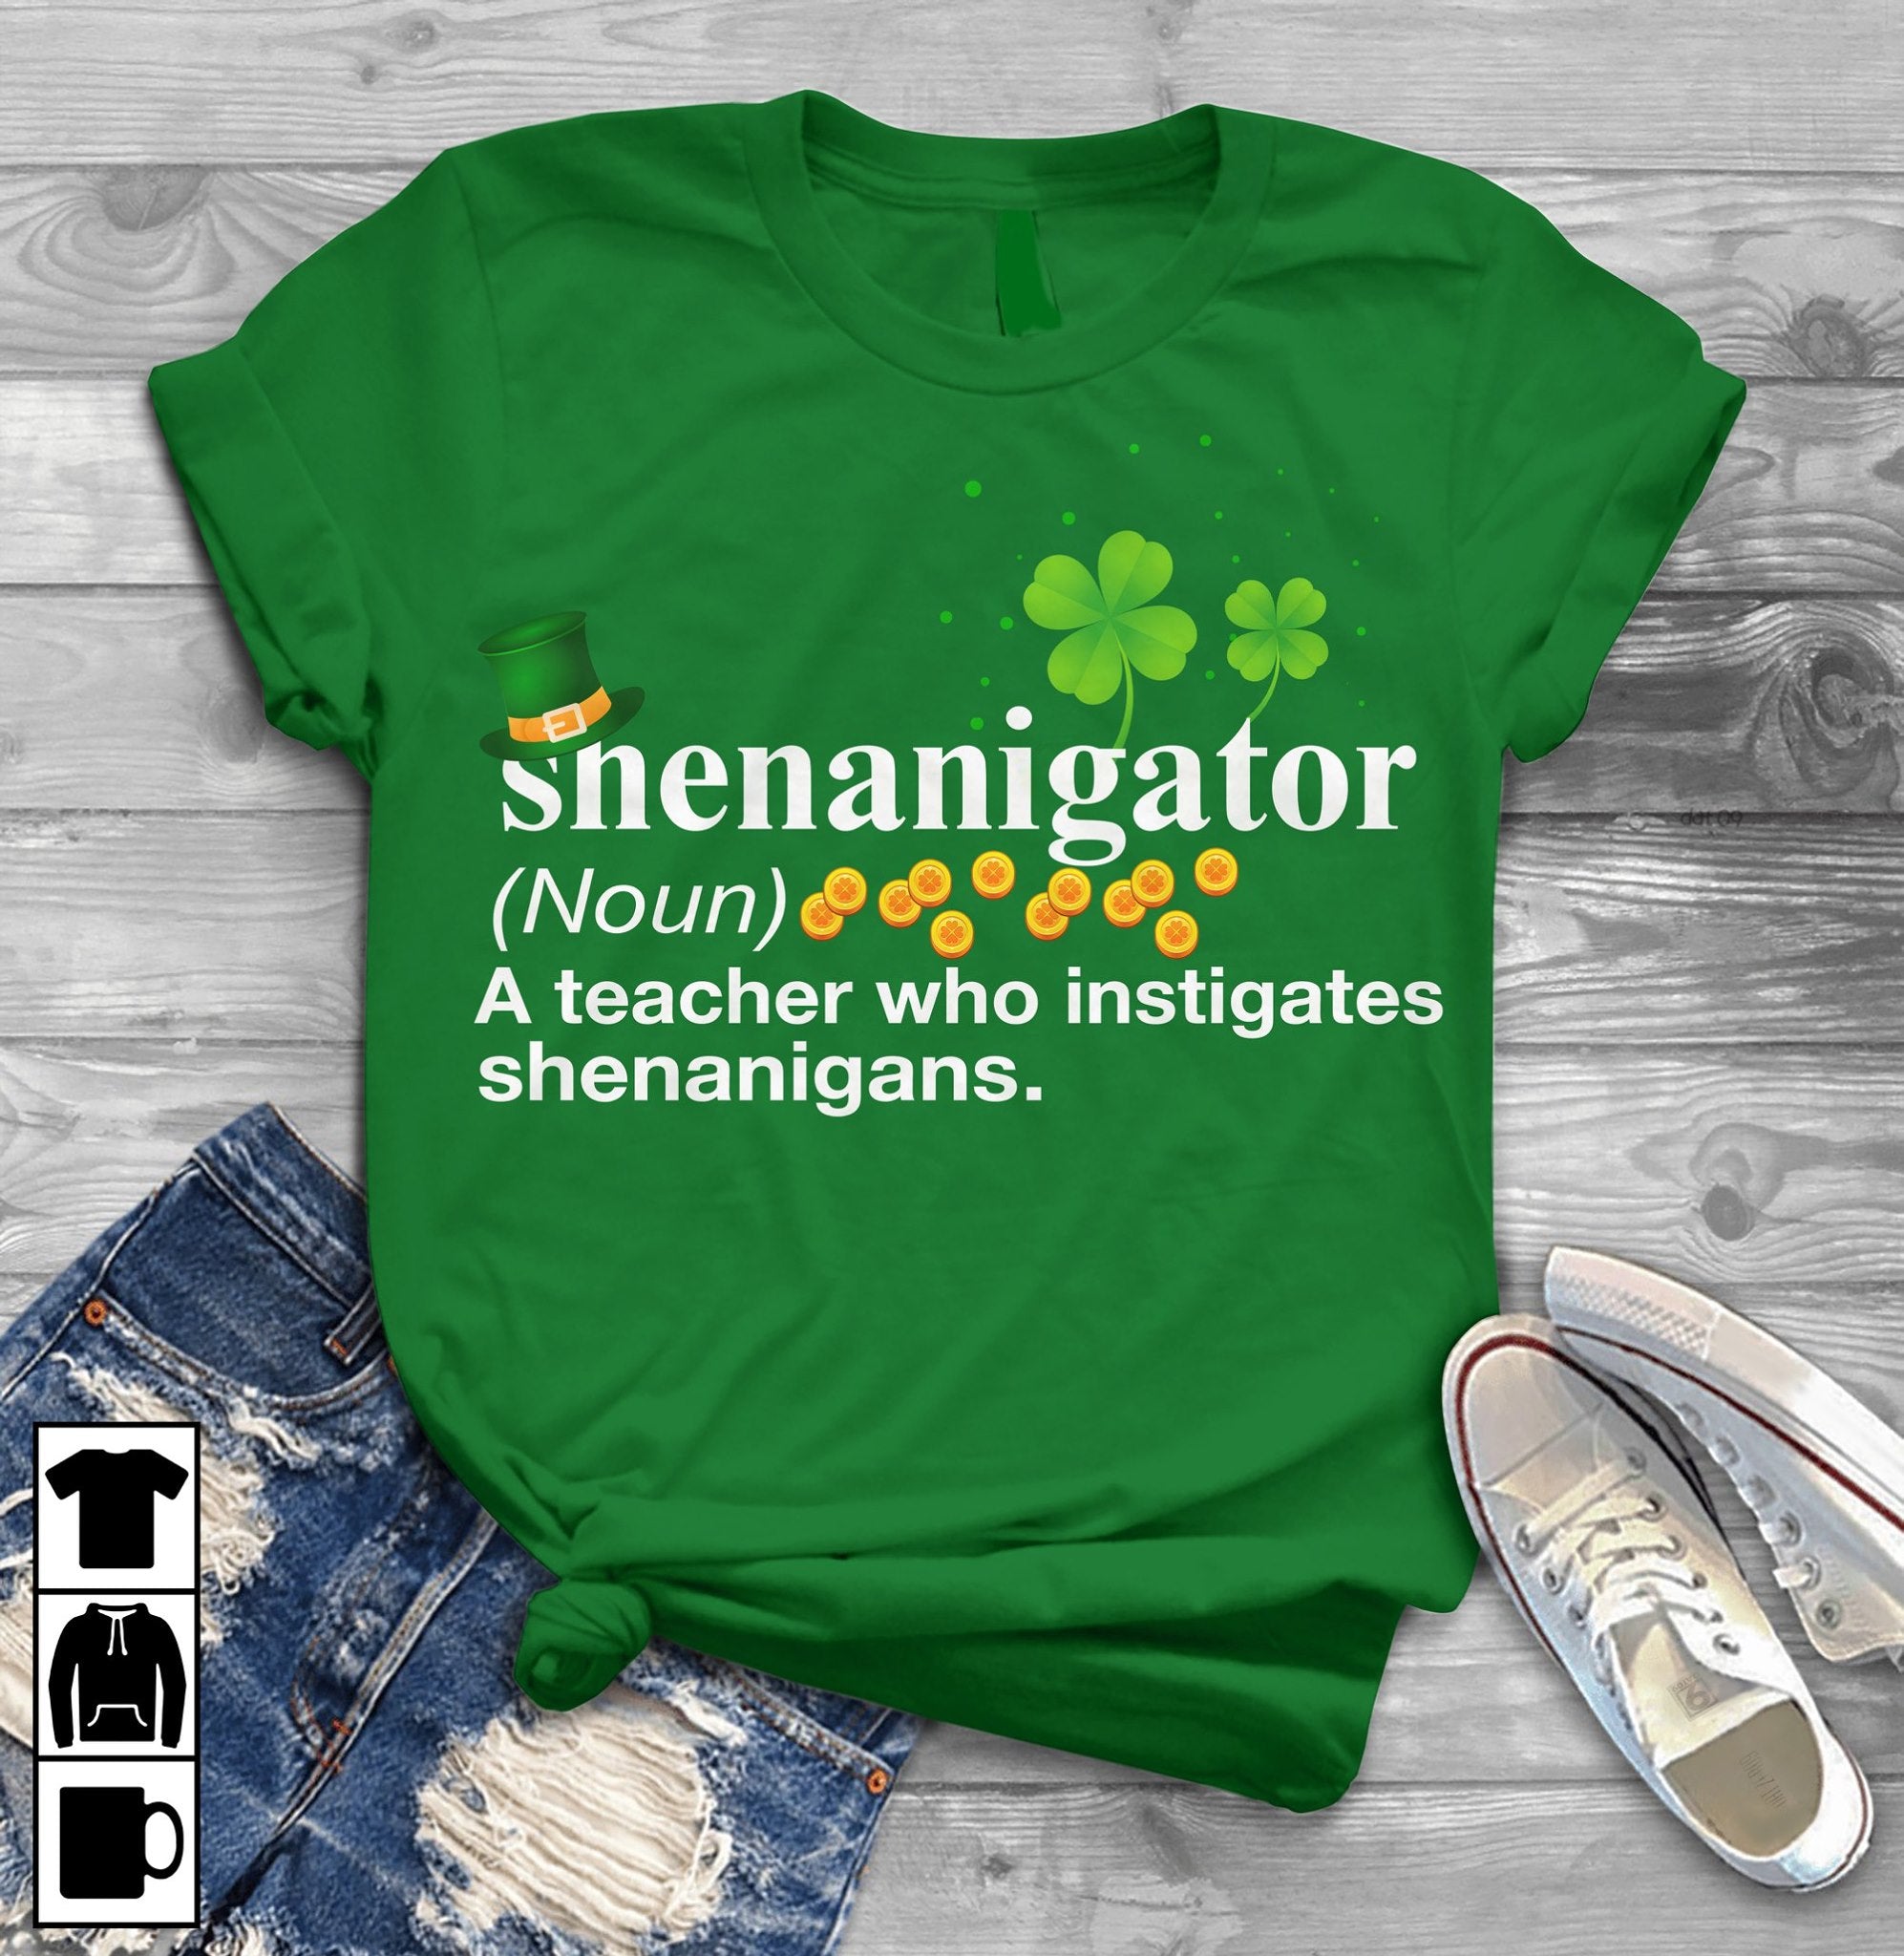 Shenanigator Shirt, Teacher St Patrick's Day, Shamrock Shirt, Luck Of The Irish, Patty's Day, Clover Shirt